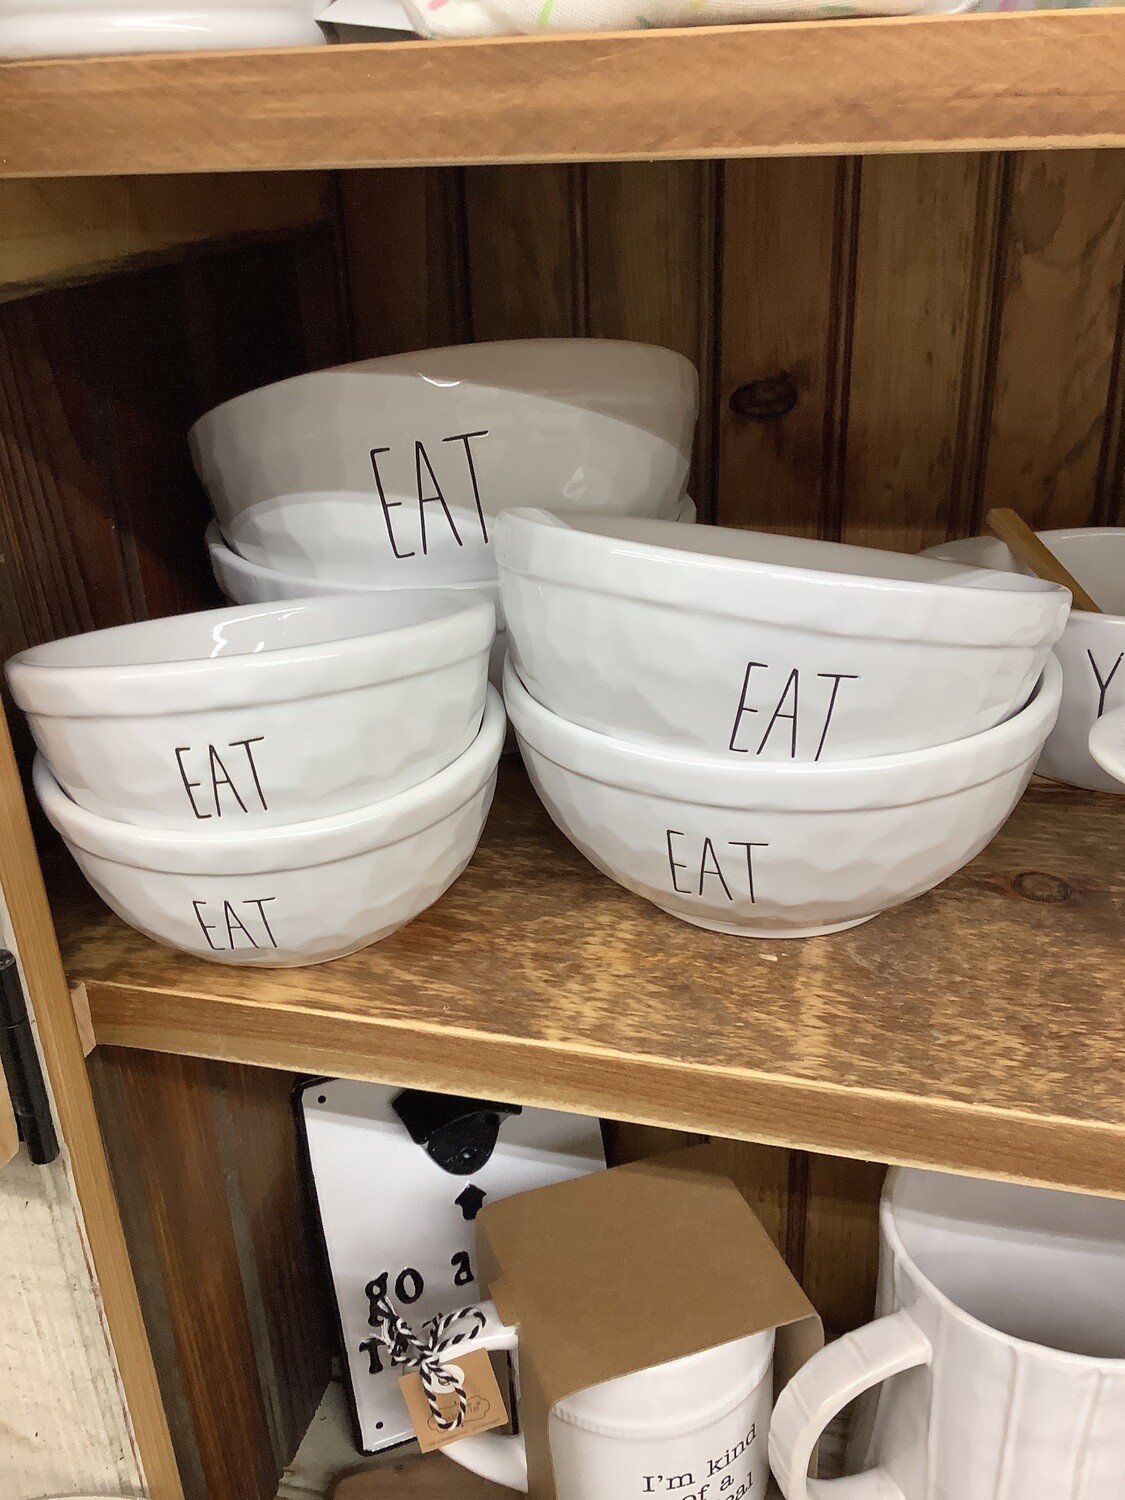 Eat bowls